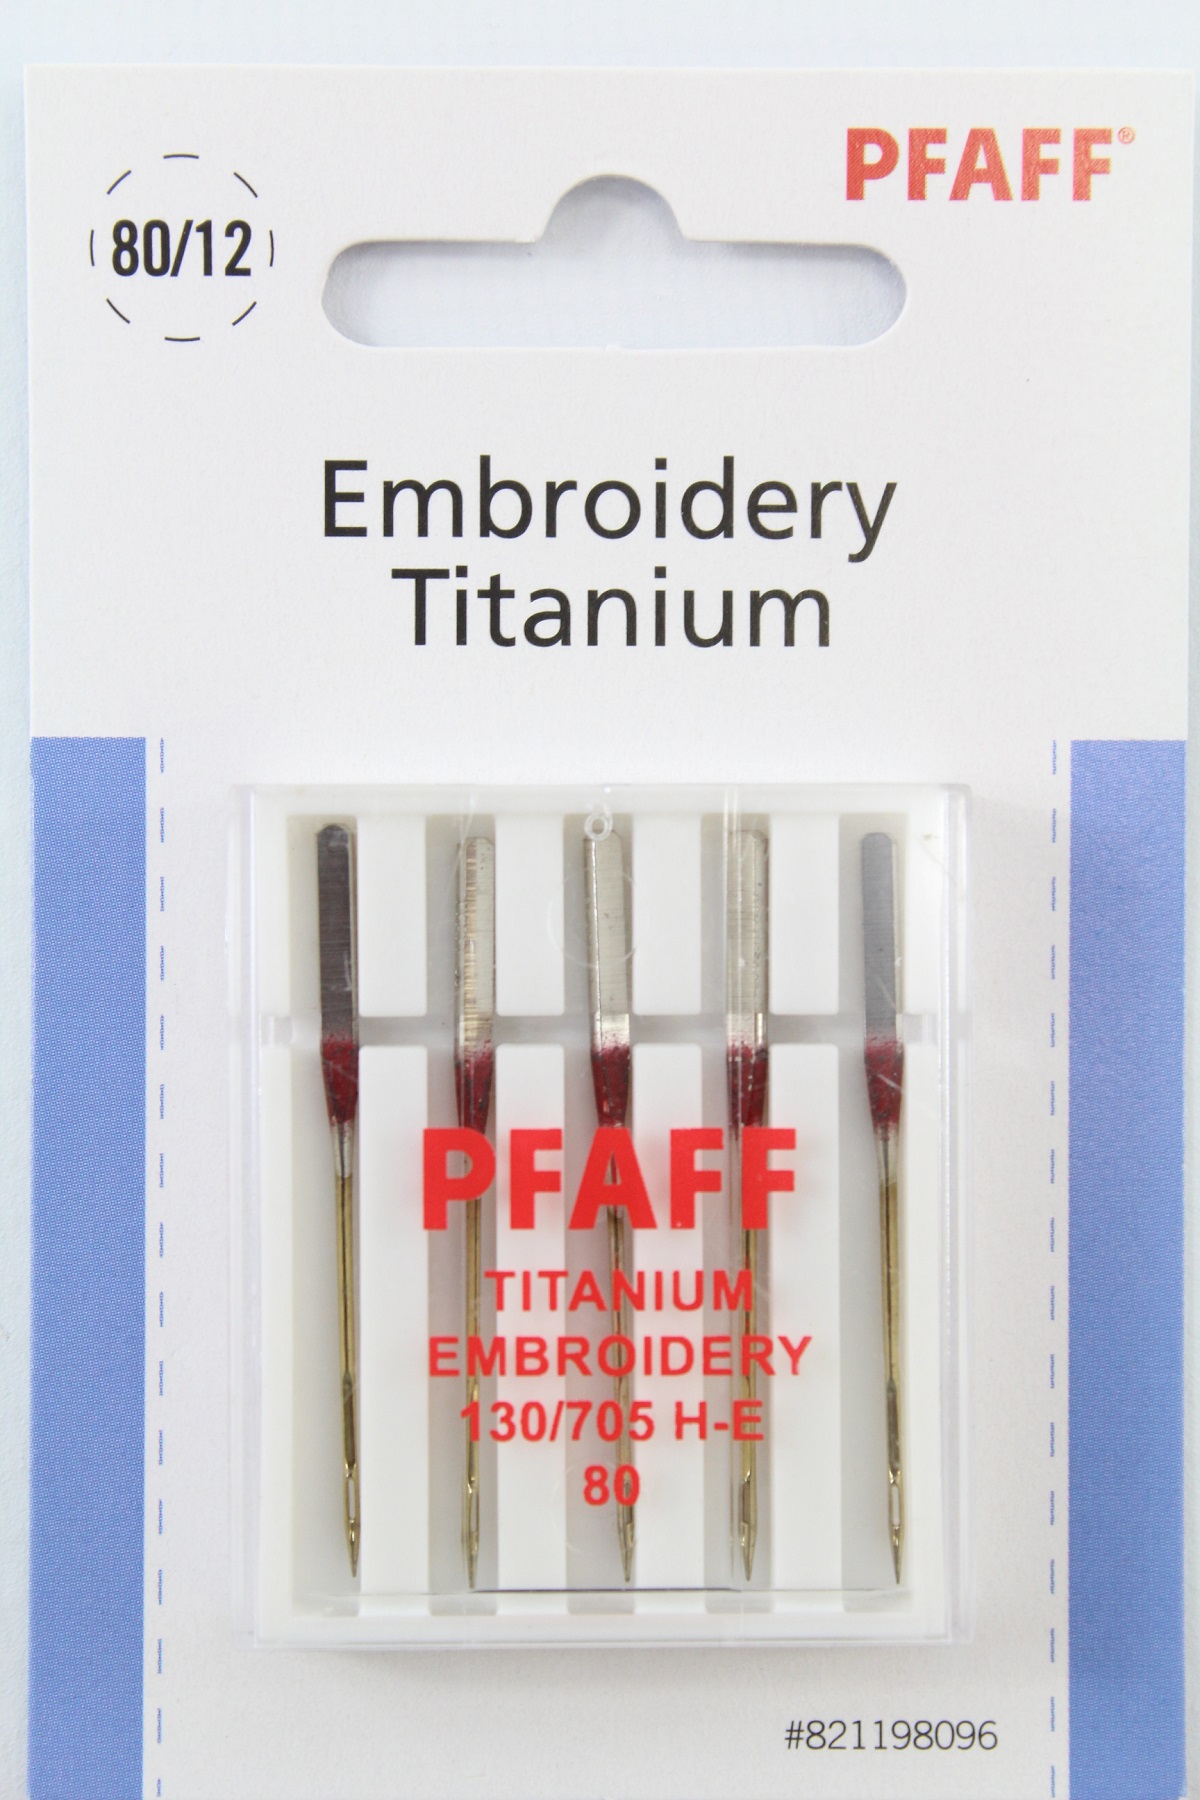 Original PFAFF Embroidery Titanium 130/705 H-E (Stärke 80) 5er Pack